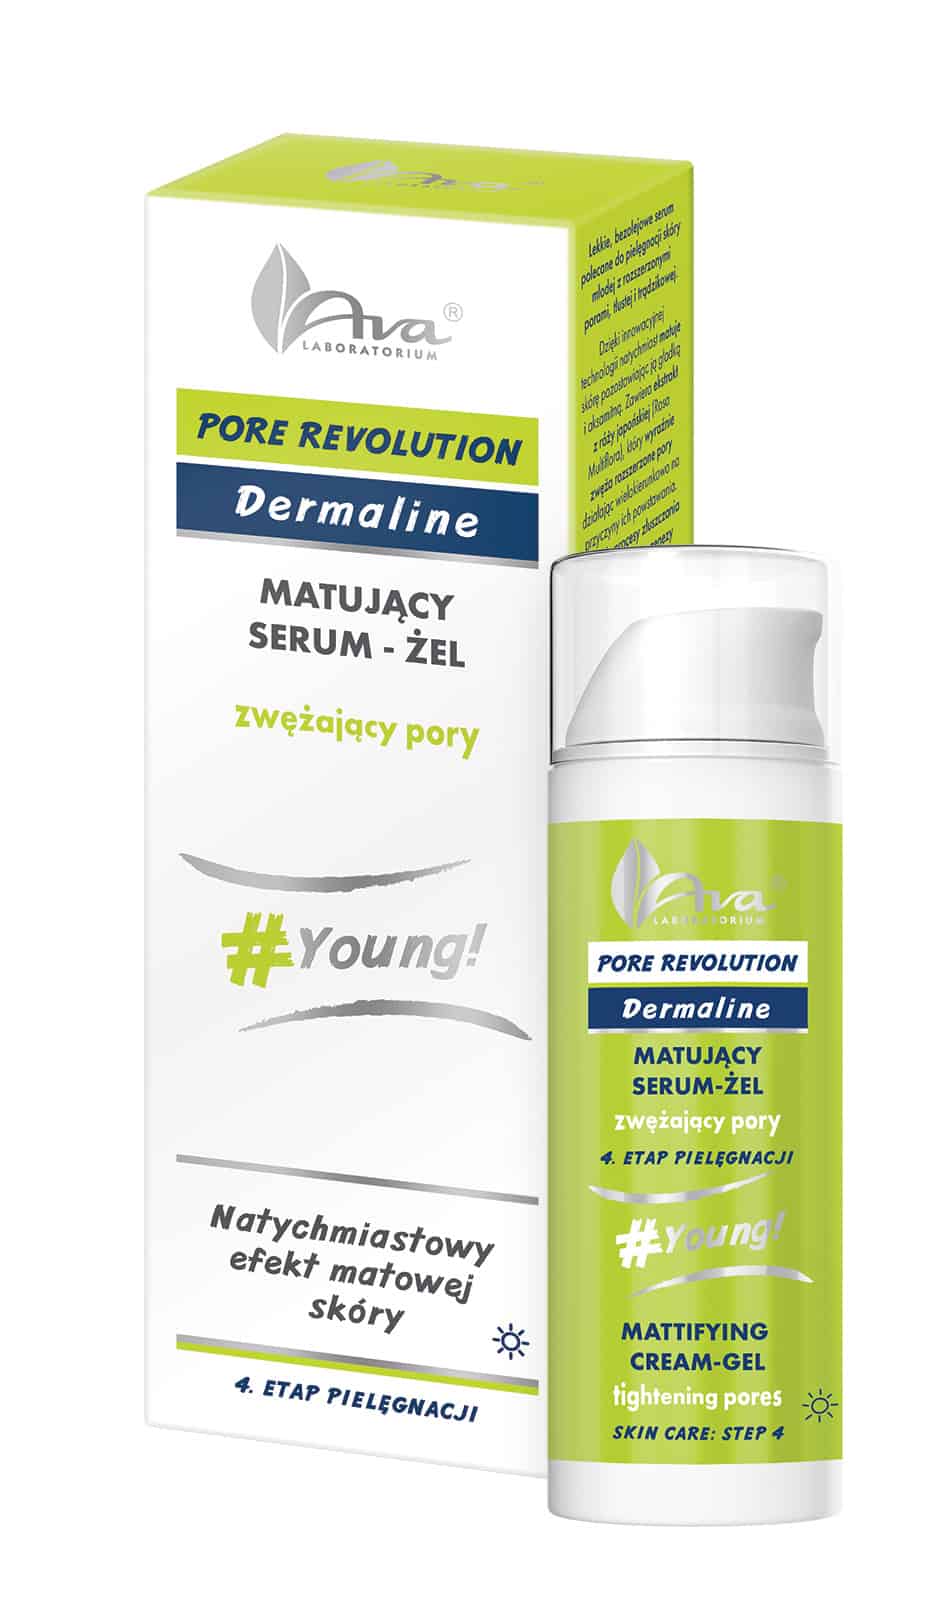 PORE REVOLUTION Mattifying serum – gel tightening pores